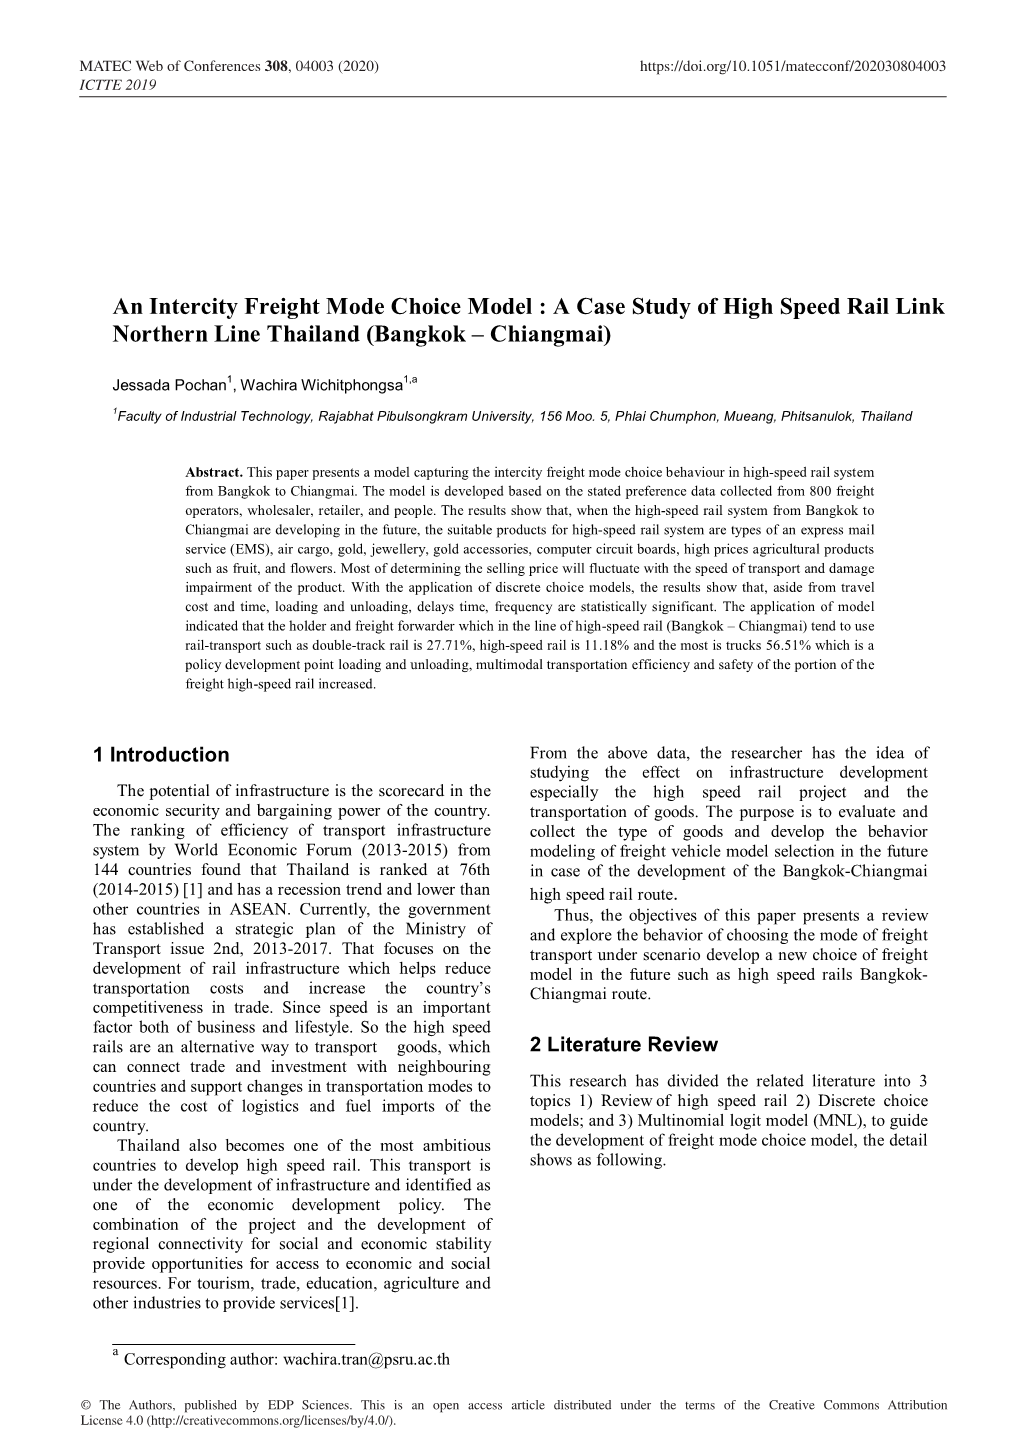 An Intercity Freight Mode Choice Model : a Case Study of High Speed Rail Link Northern Line Thailand (Bangkok – Chiangmai)